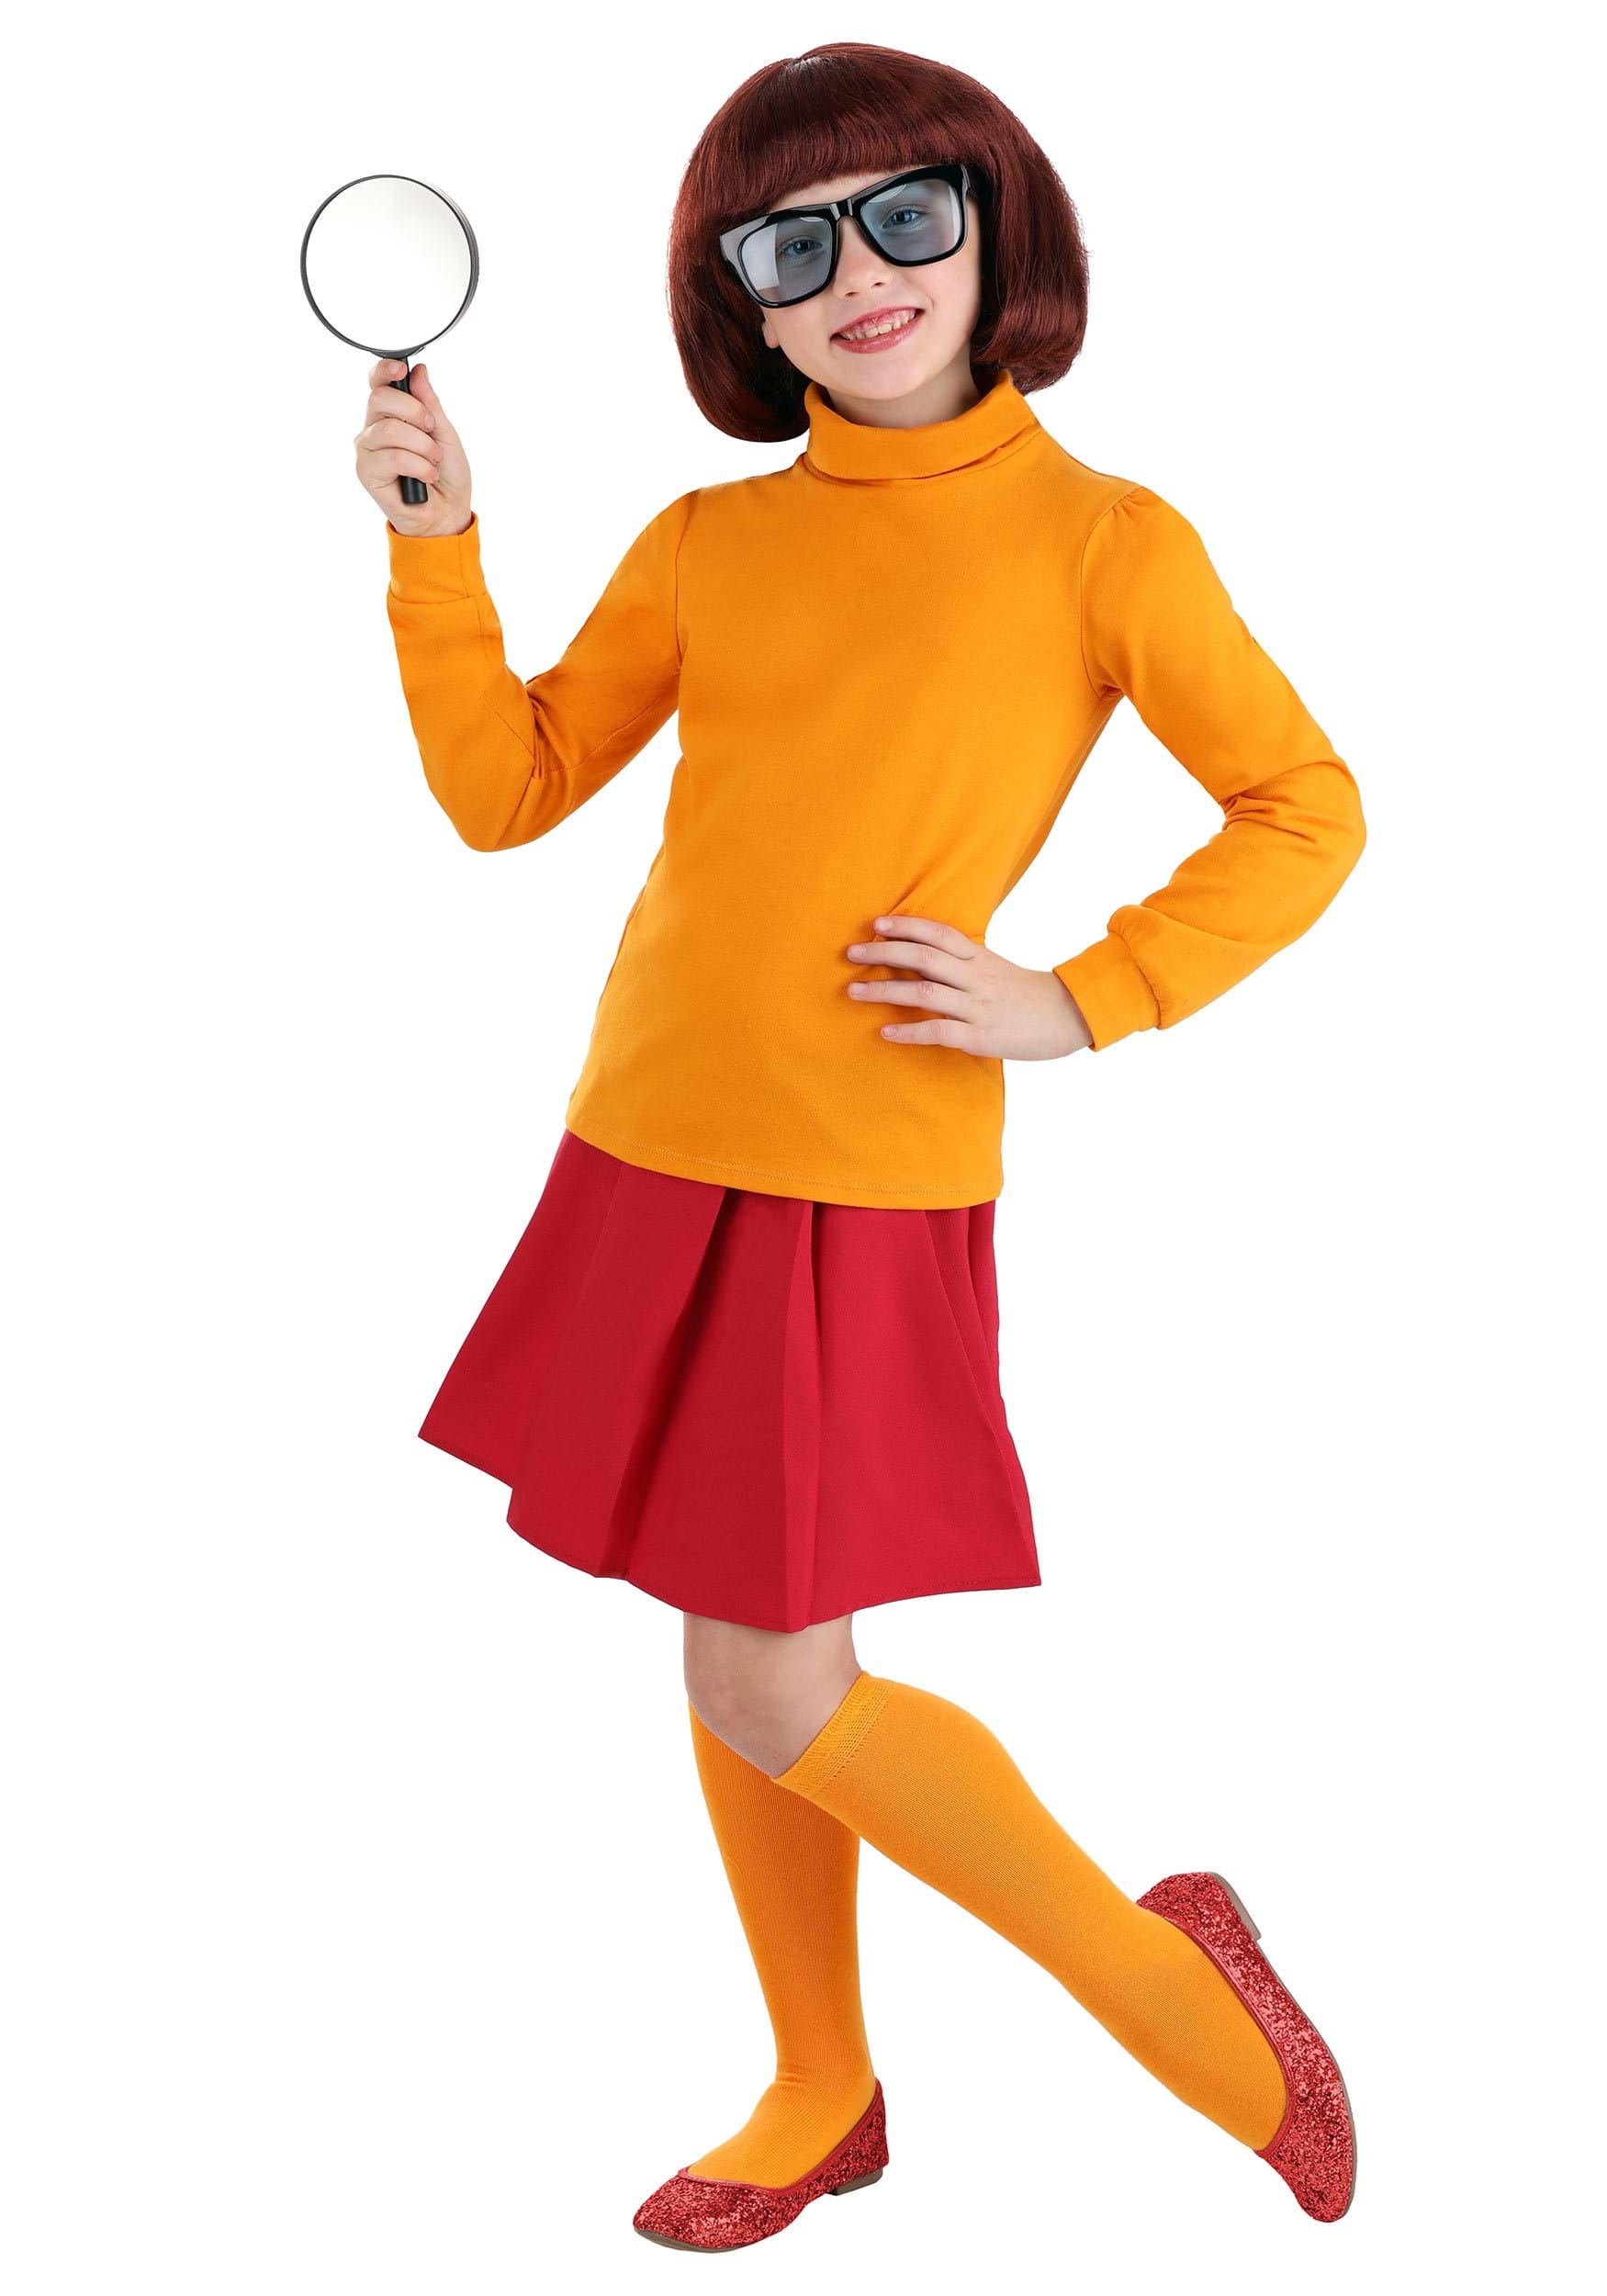 Photos - Fancy Dress FUN Costumes Scooby Doo Velma Costume for Kids Orange/Red FUN1435CH